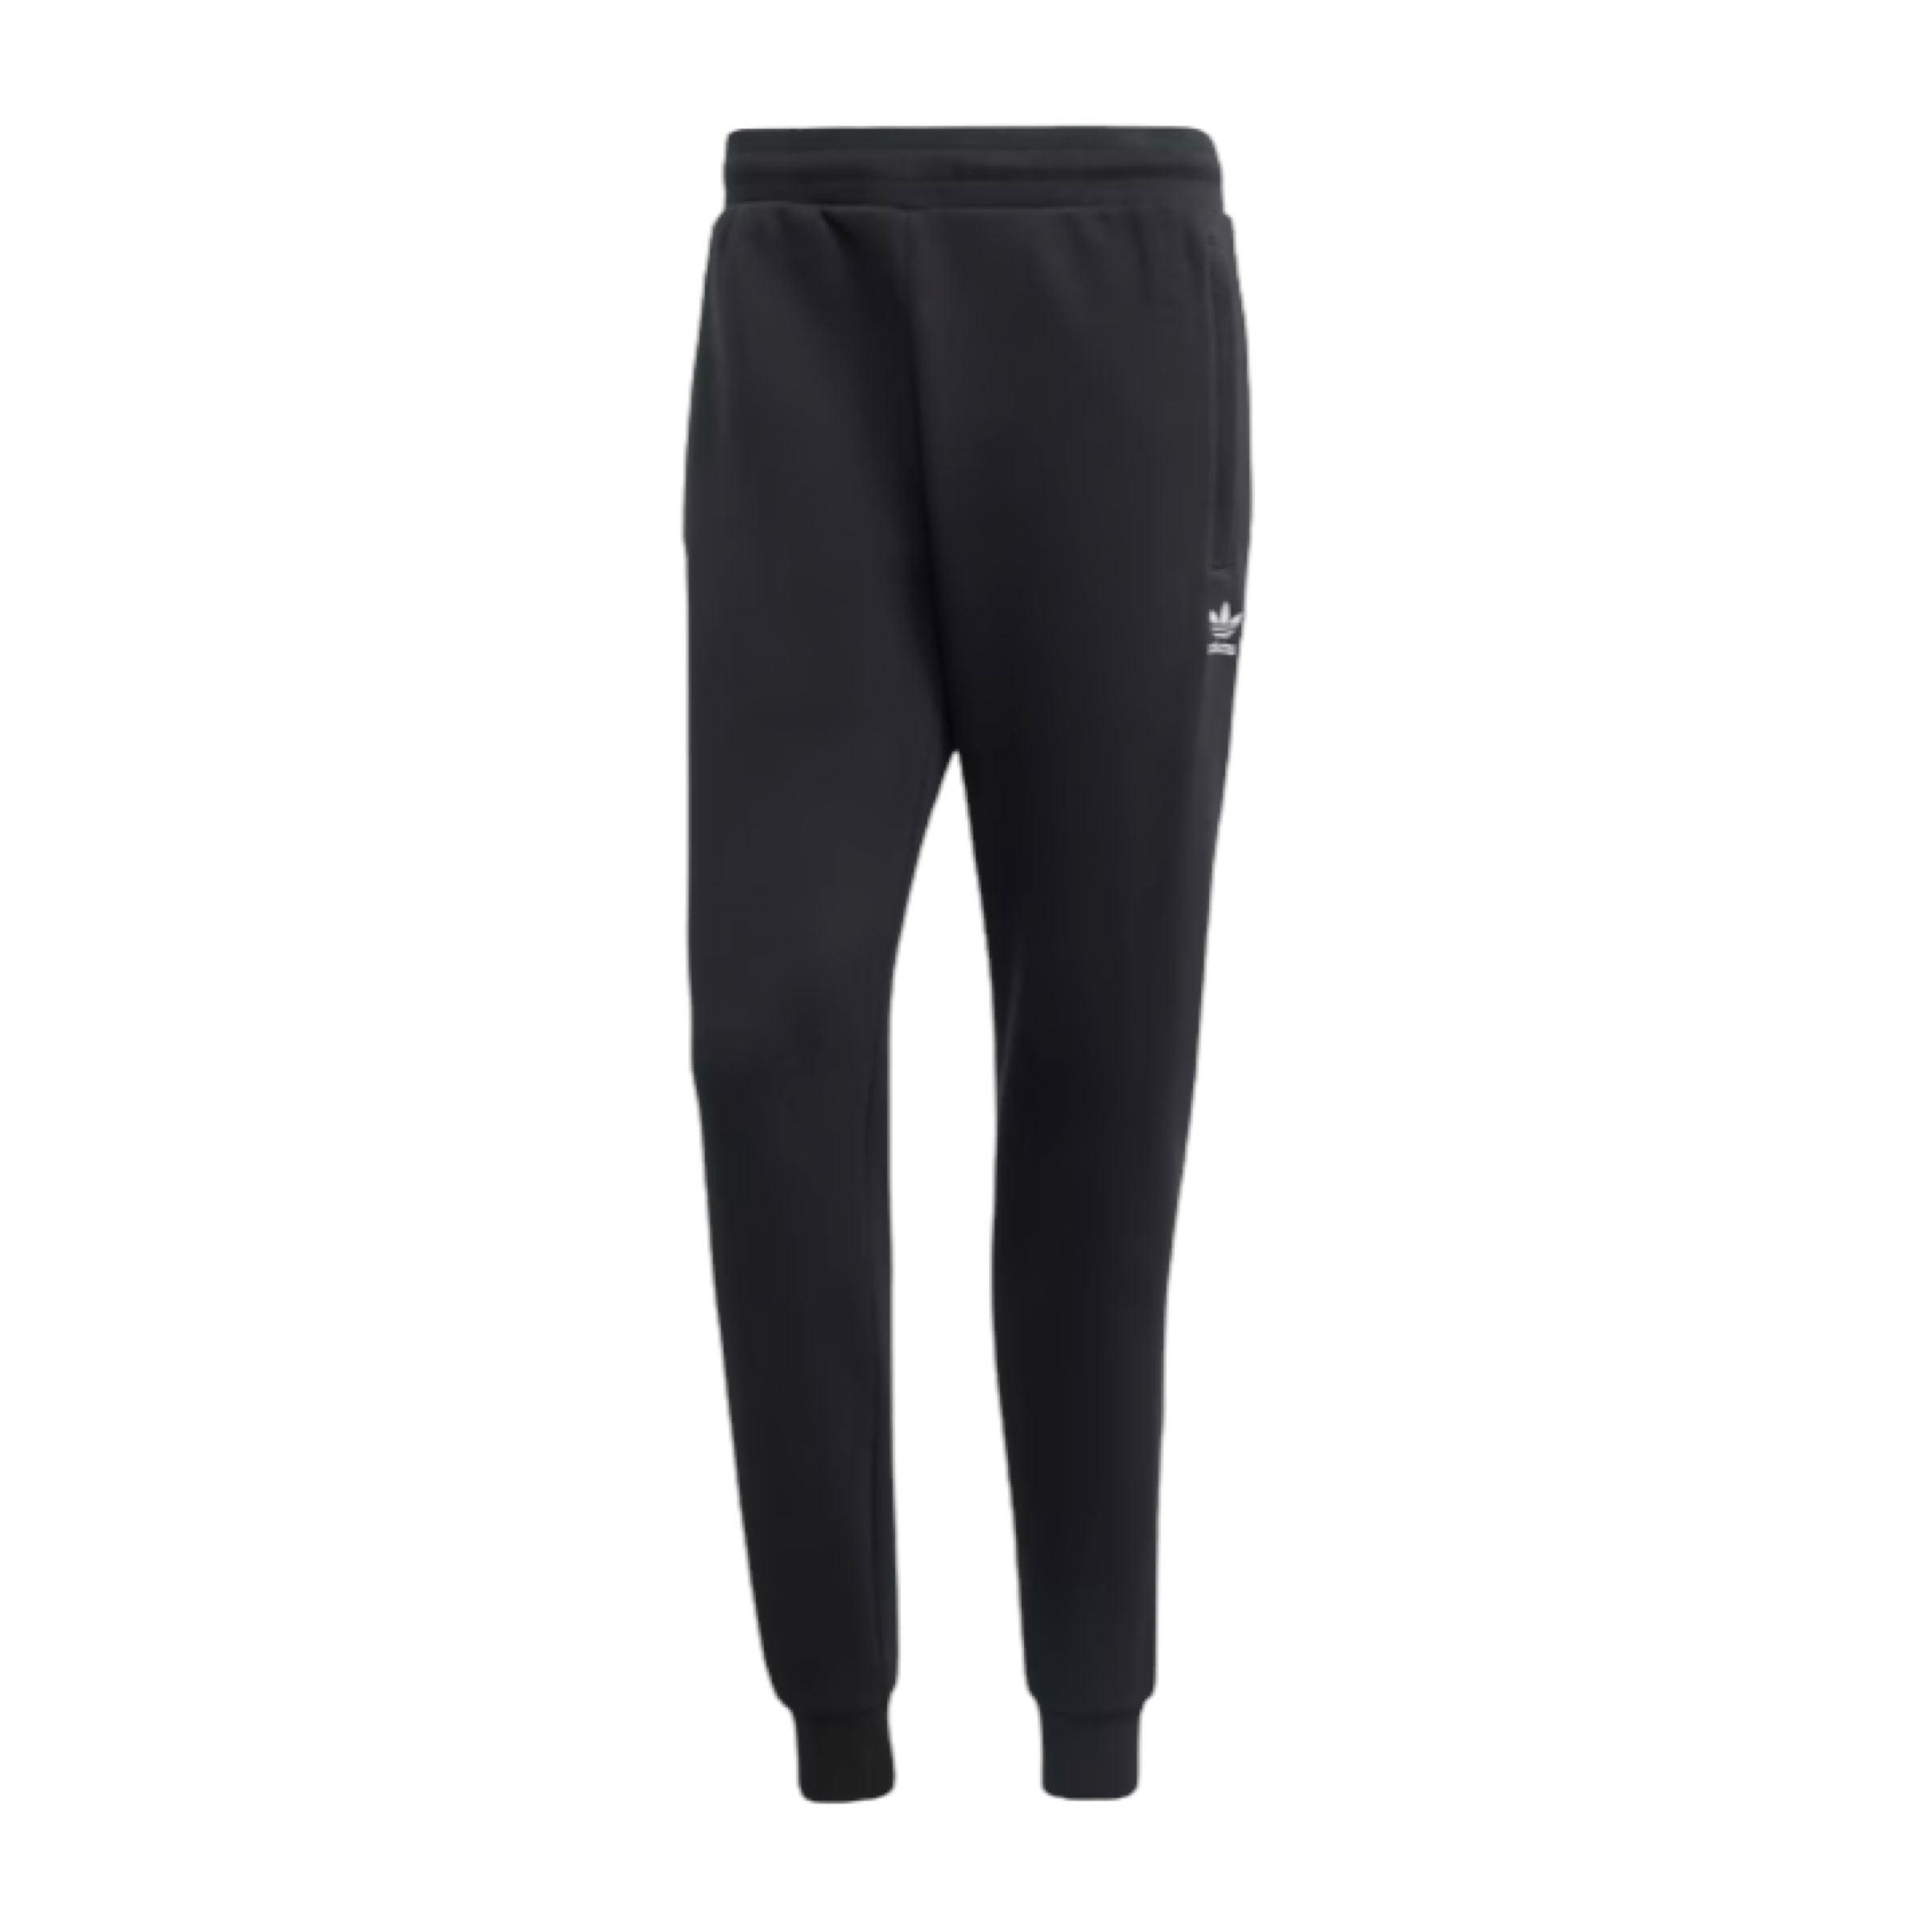 Adidas | Pantaloni Trefoil Essential Uomo Black - Fabbrica Ski Sises